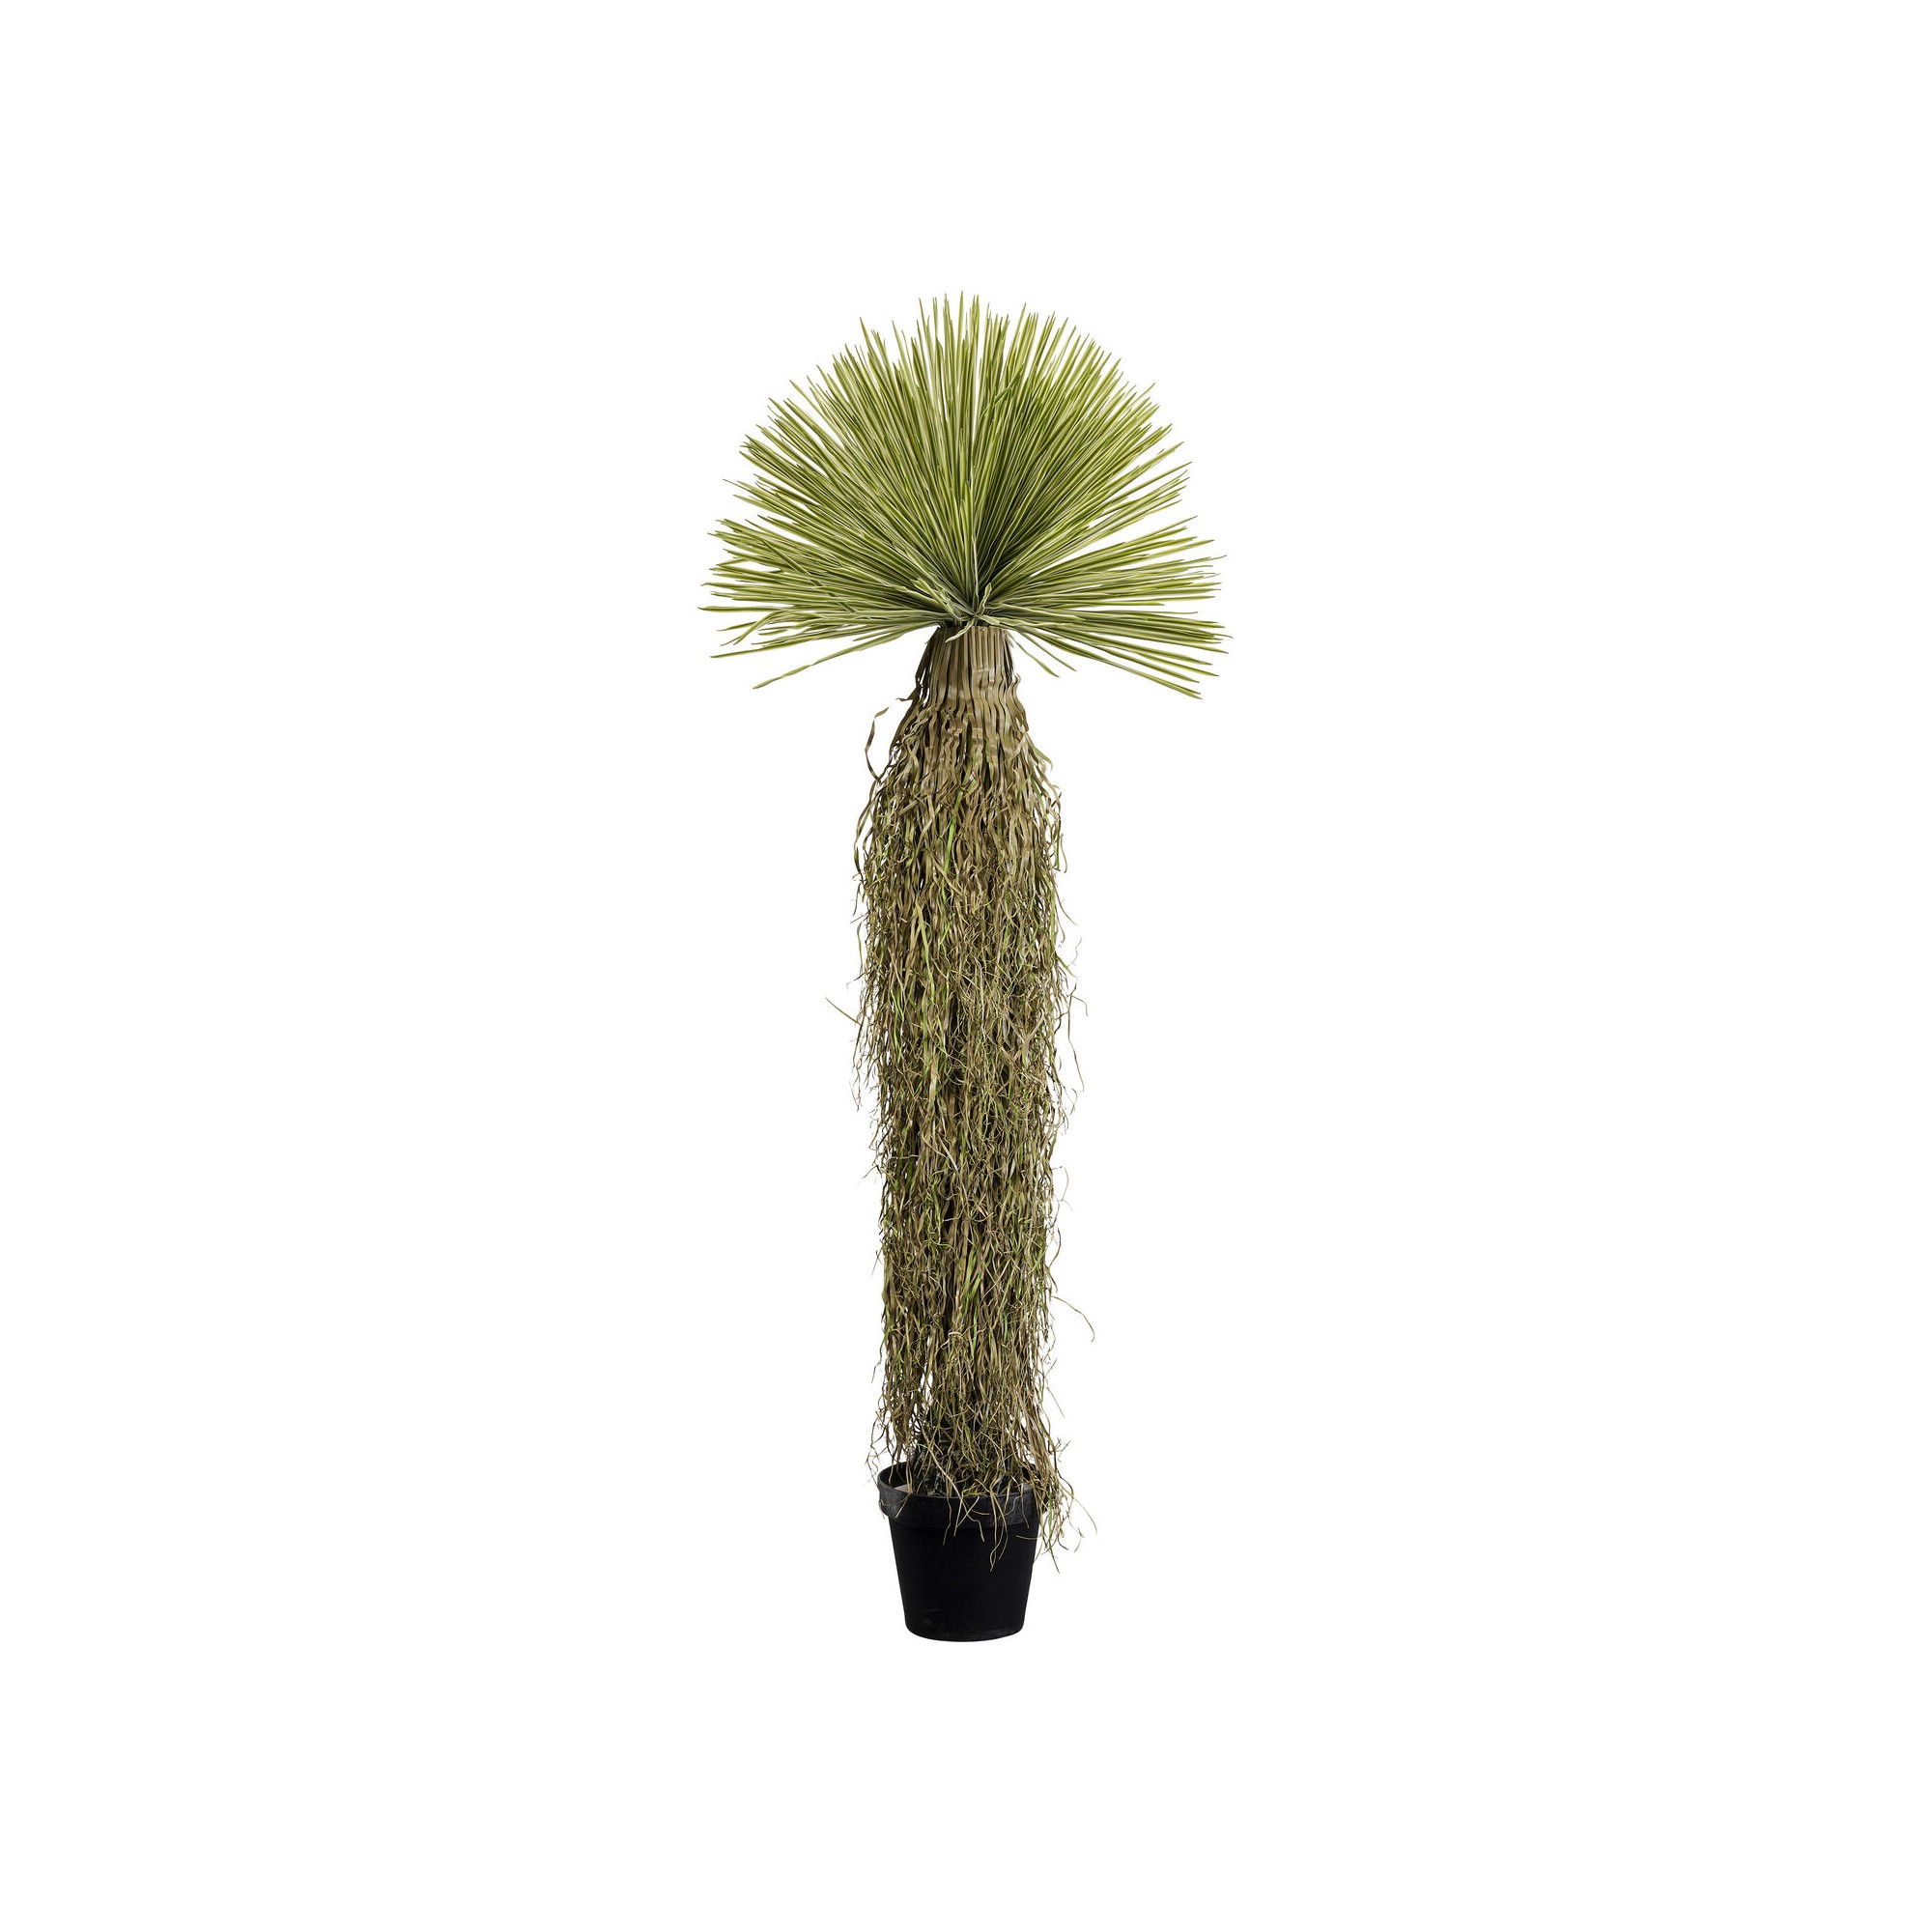 Plante décorative Yucca Rostrata 180cm